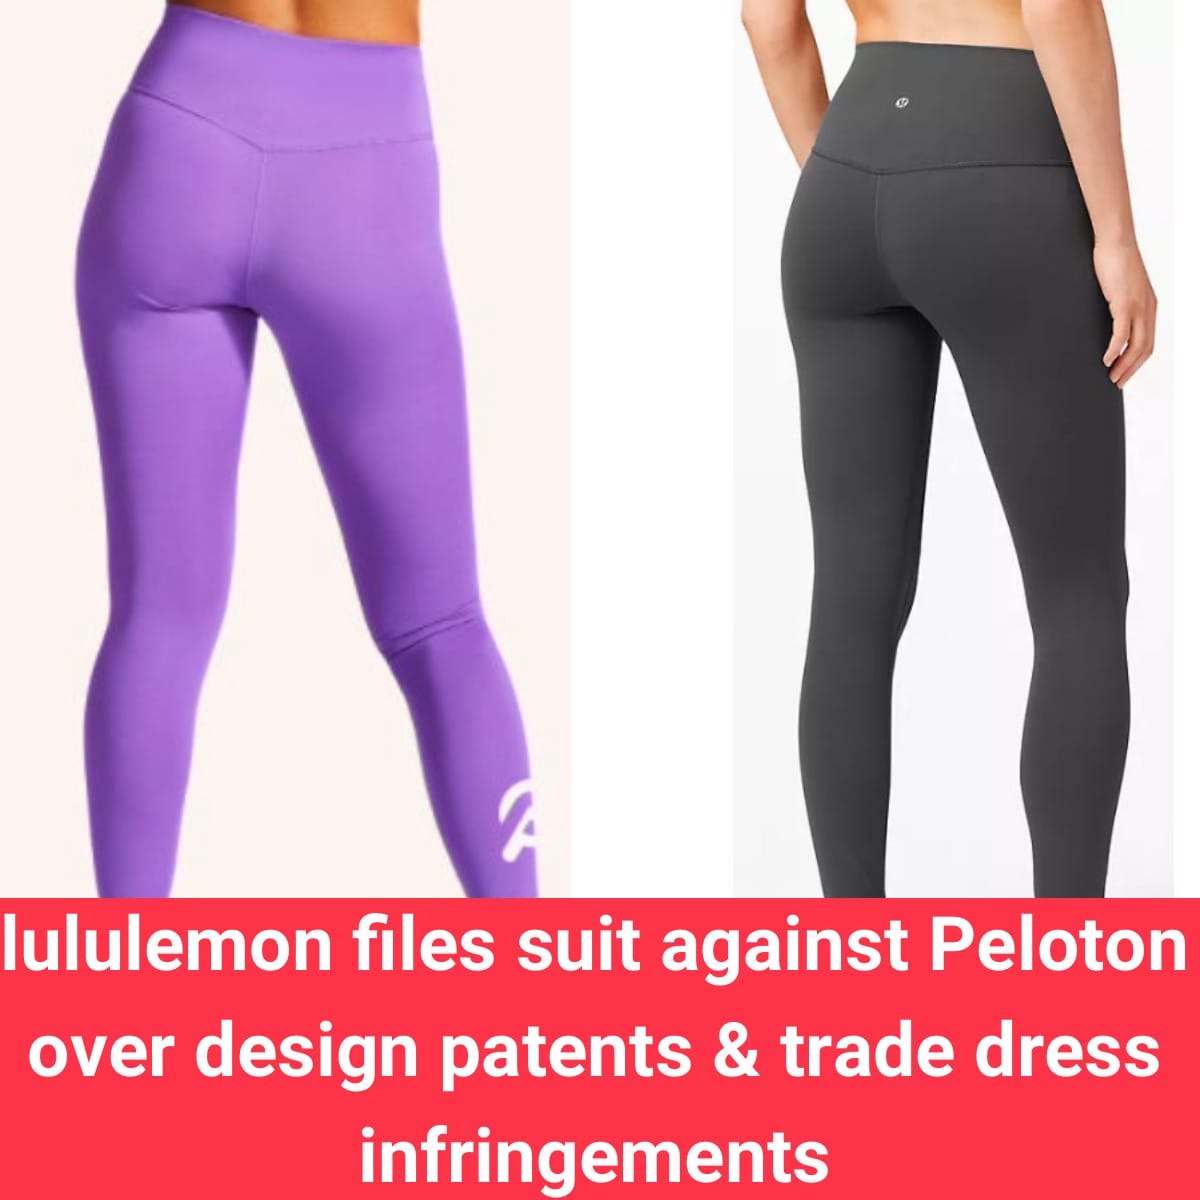 lululemon sues Peloton over design patent infringement & trade